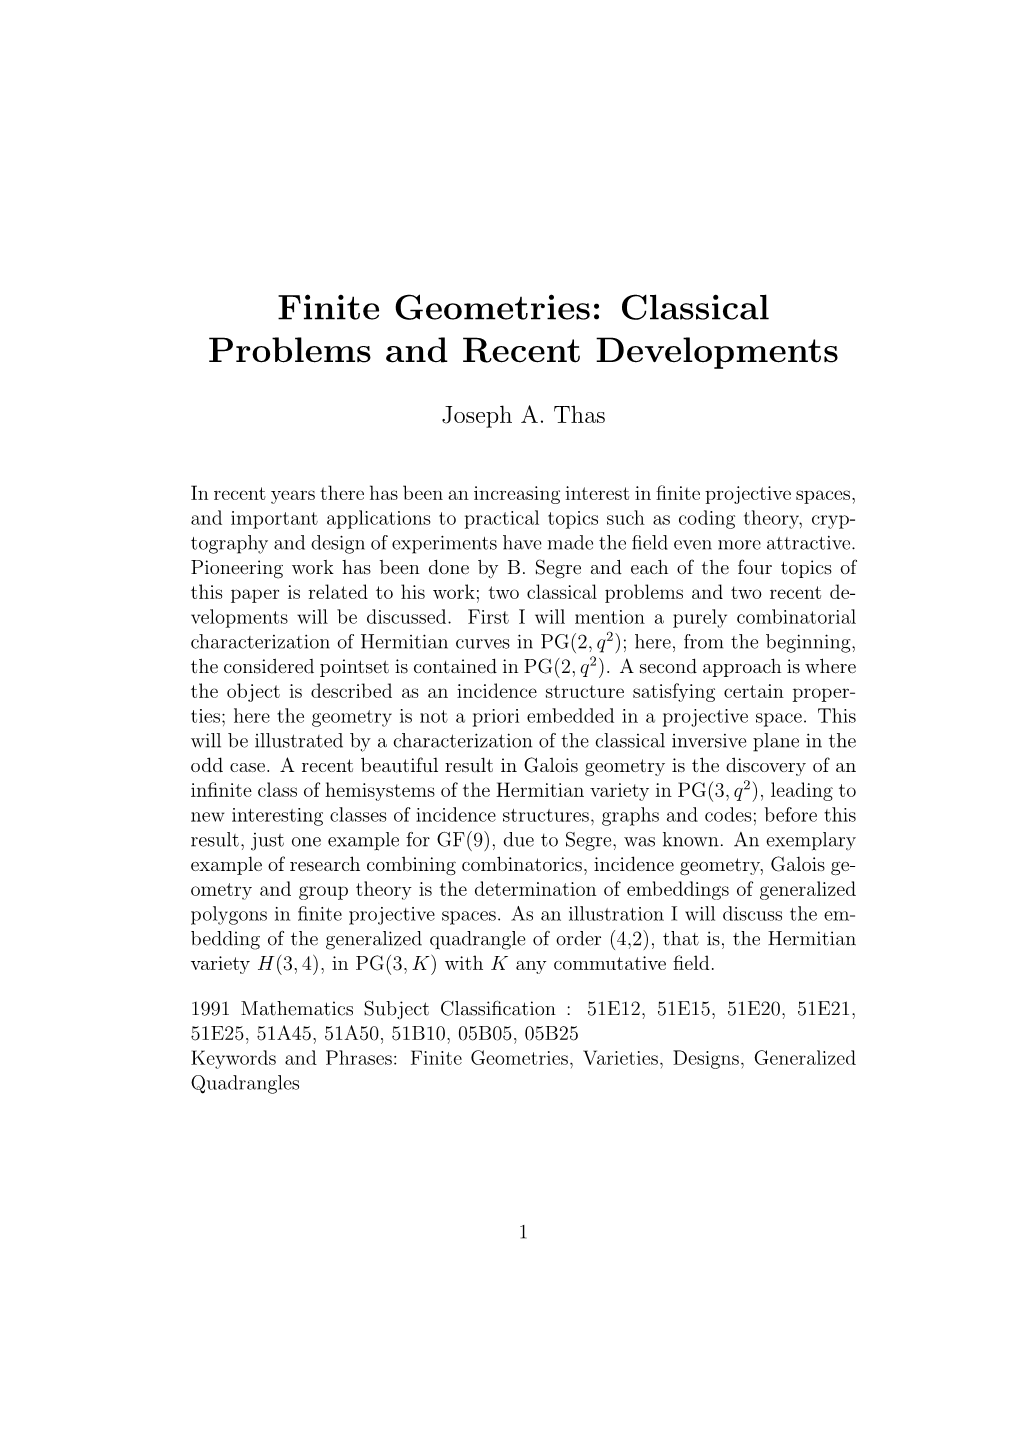 Finite Geometries: Classical Problems and Recent Developments